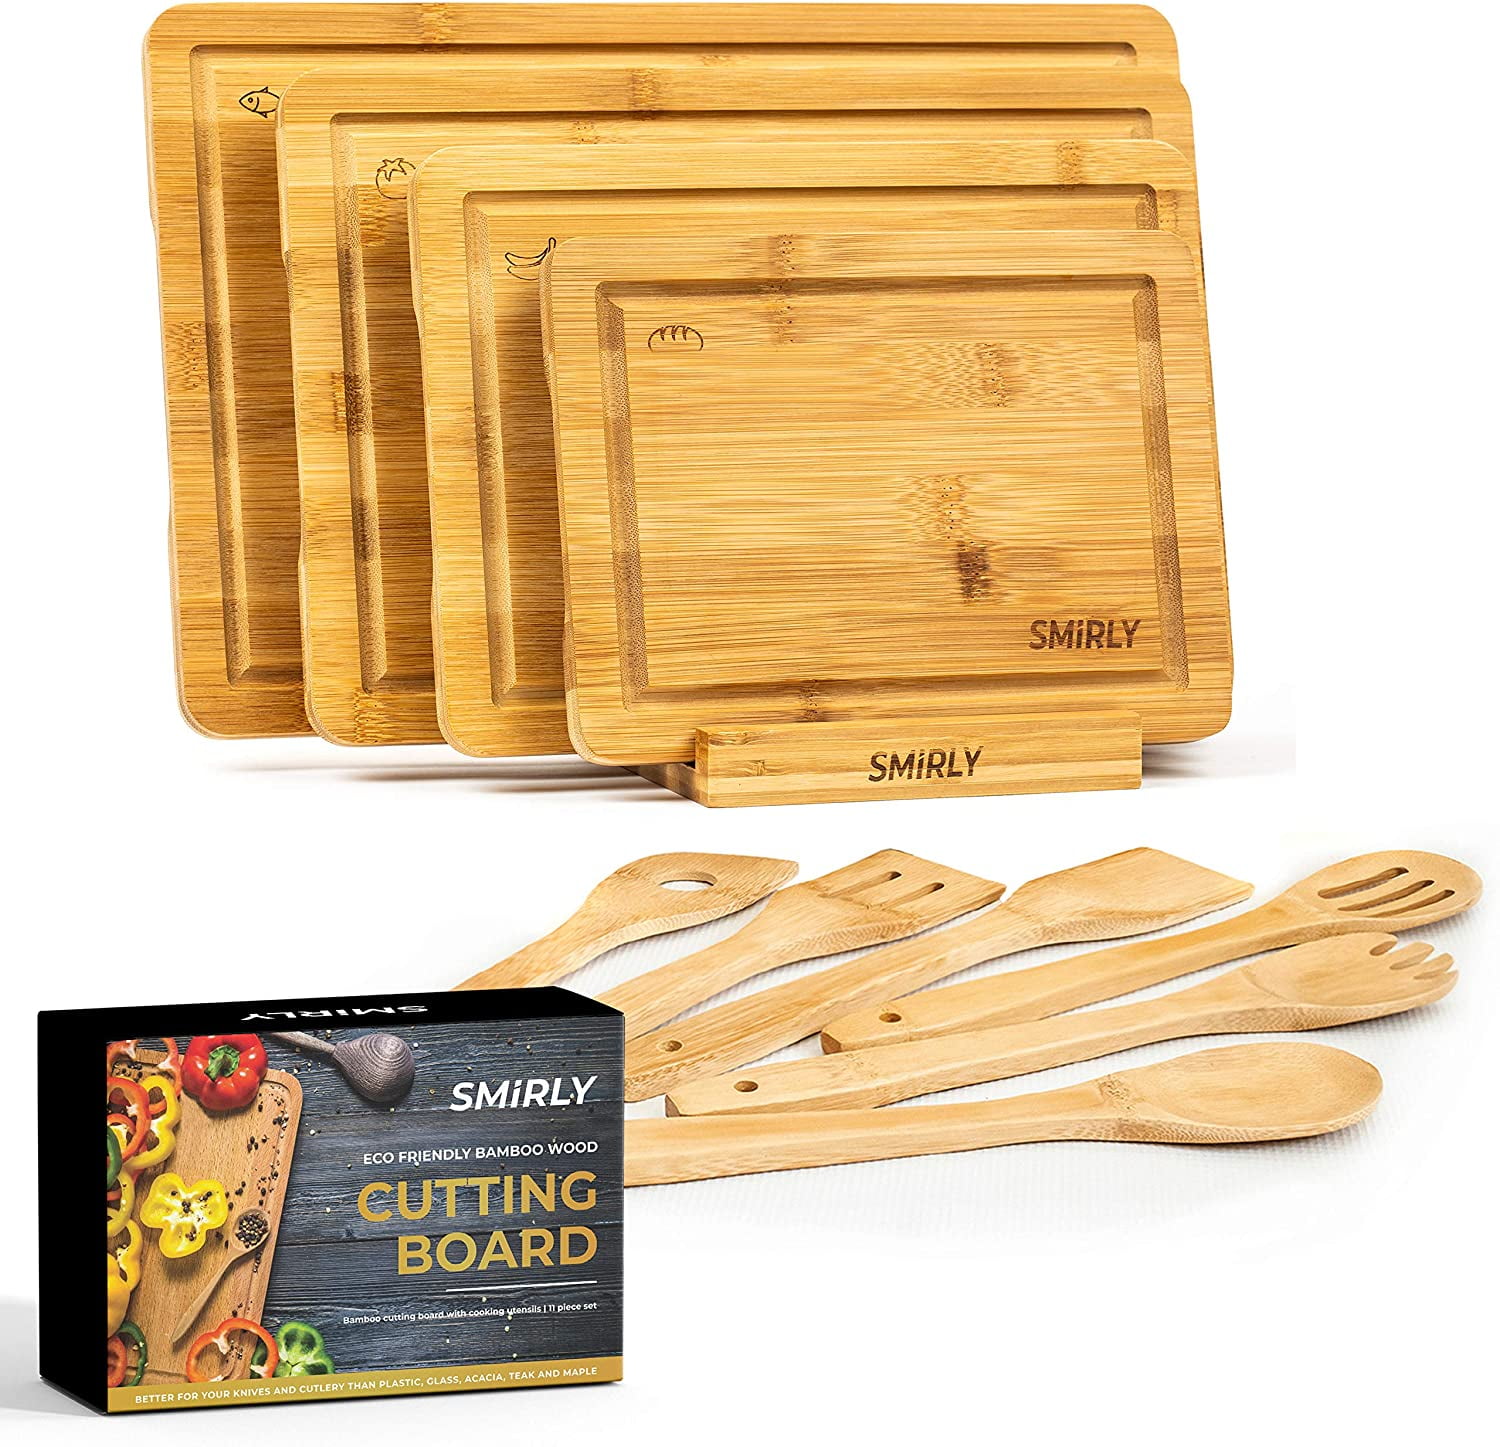  SMIRLY Bamboo Cutting Board Set - Wood Cutting Board Set with  Holder, Large Wooden Cutting Boards For Kitchen, Cutting Board Wood, Wooden  Chopping Board, Wooden Cutting Board Set: Home & Kitchen